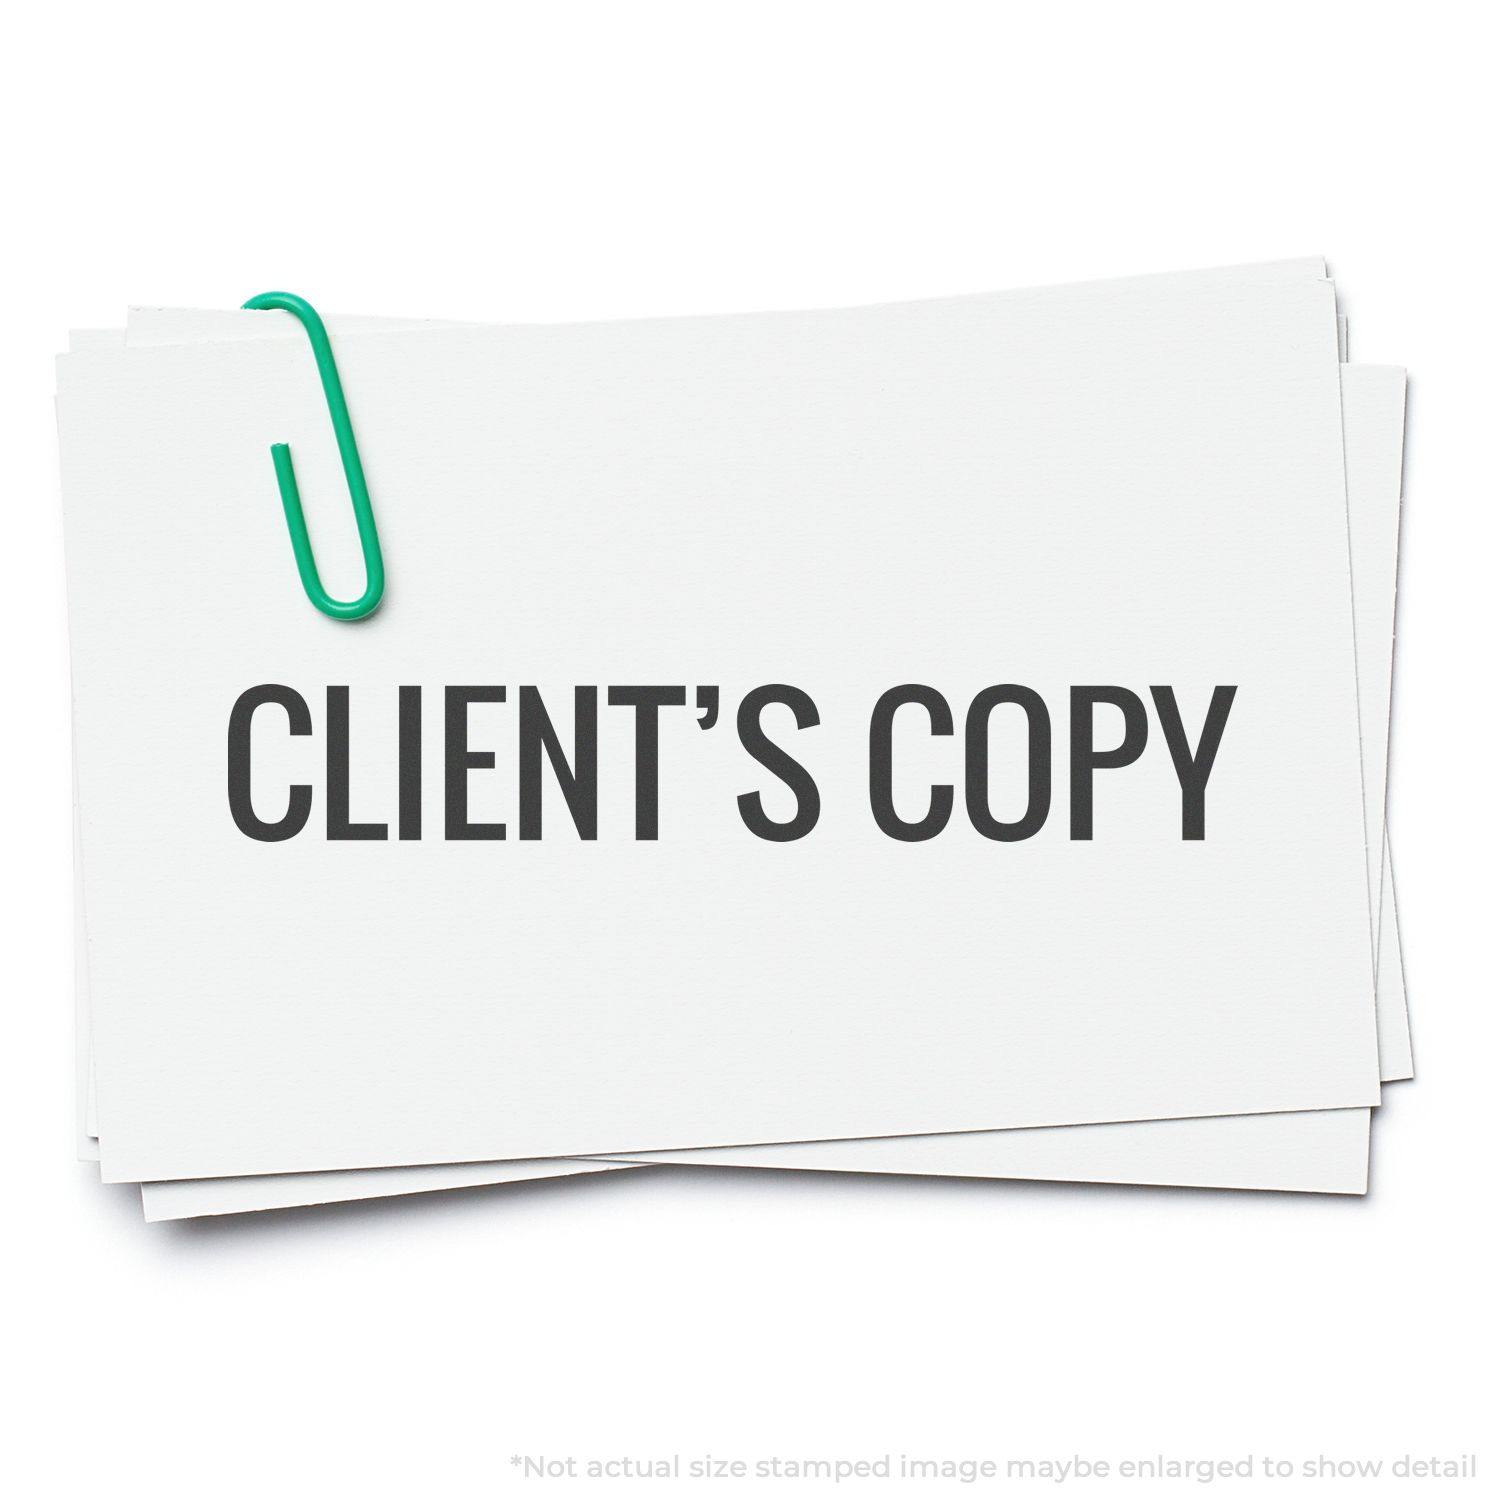 Client's Copy Rubber Stamp Lifestyle Photo